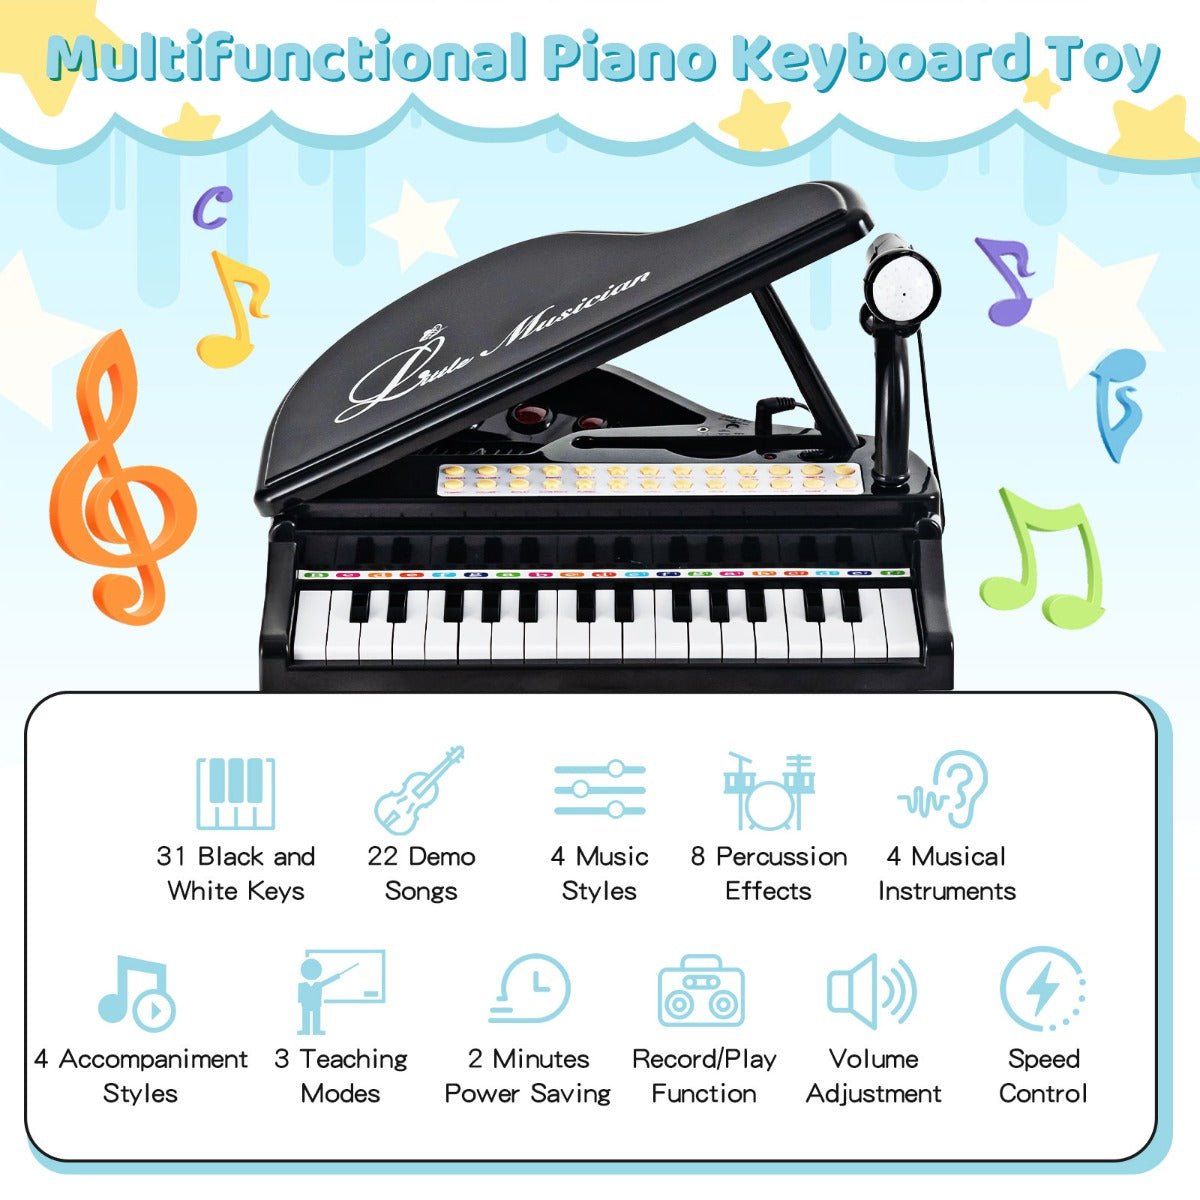 Kids Mega Mart: Your Destination for Musical Fun with Black Keyboards